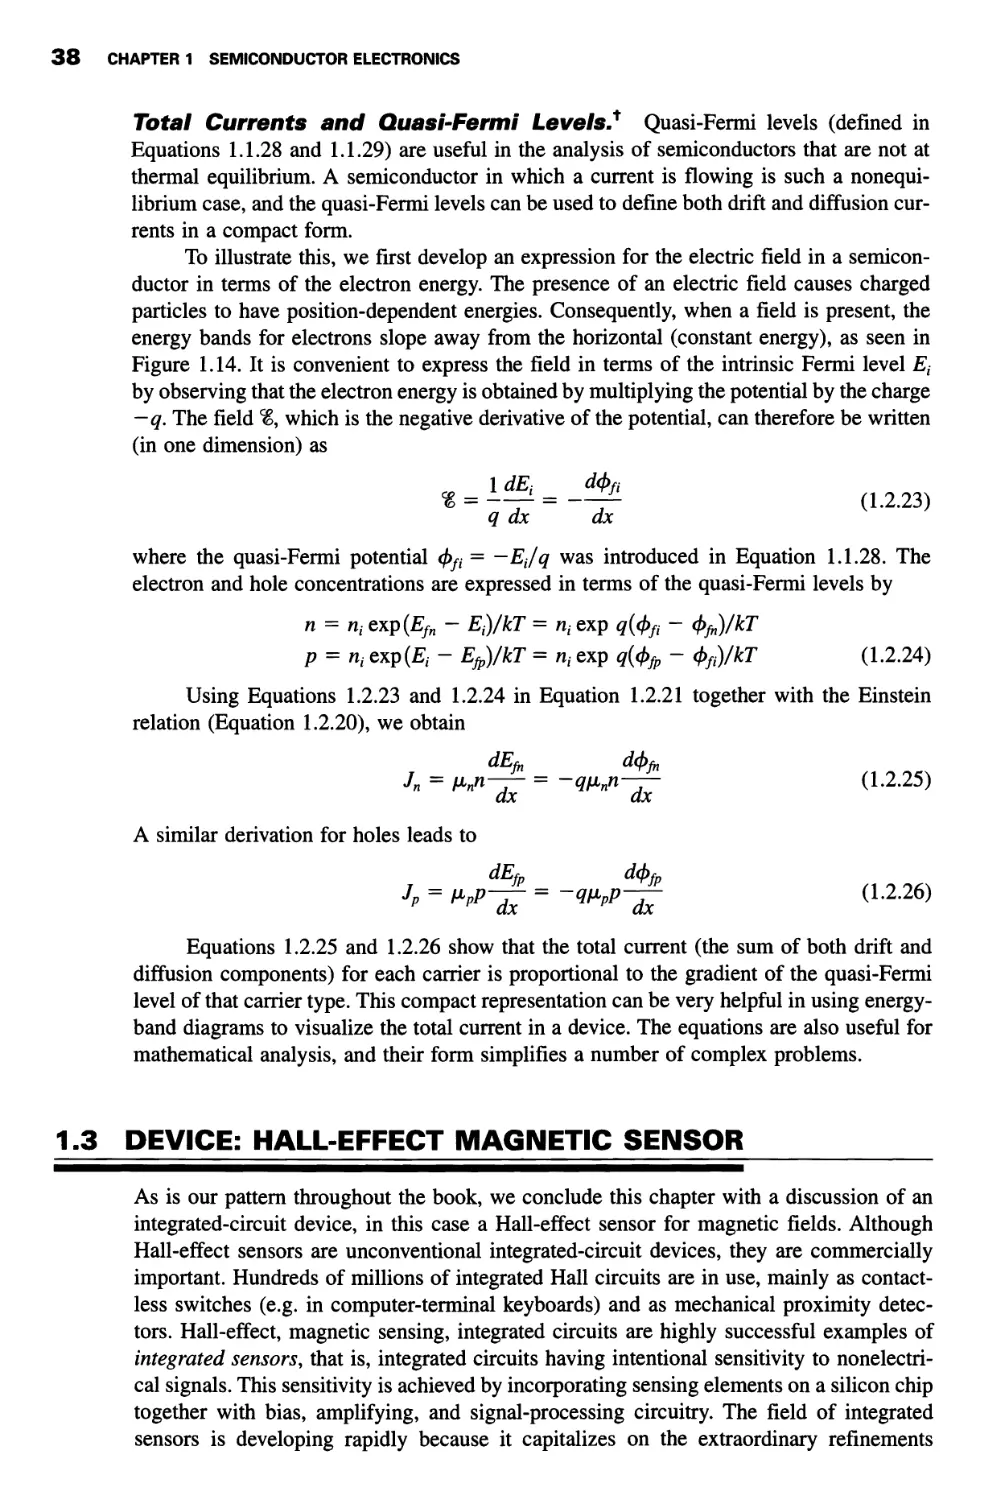 1.3 Device: Hall-Effect Magnetic Sensor